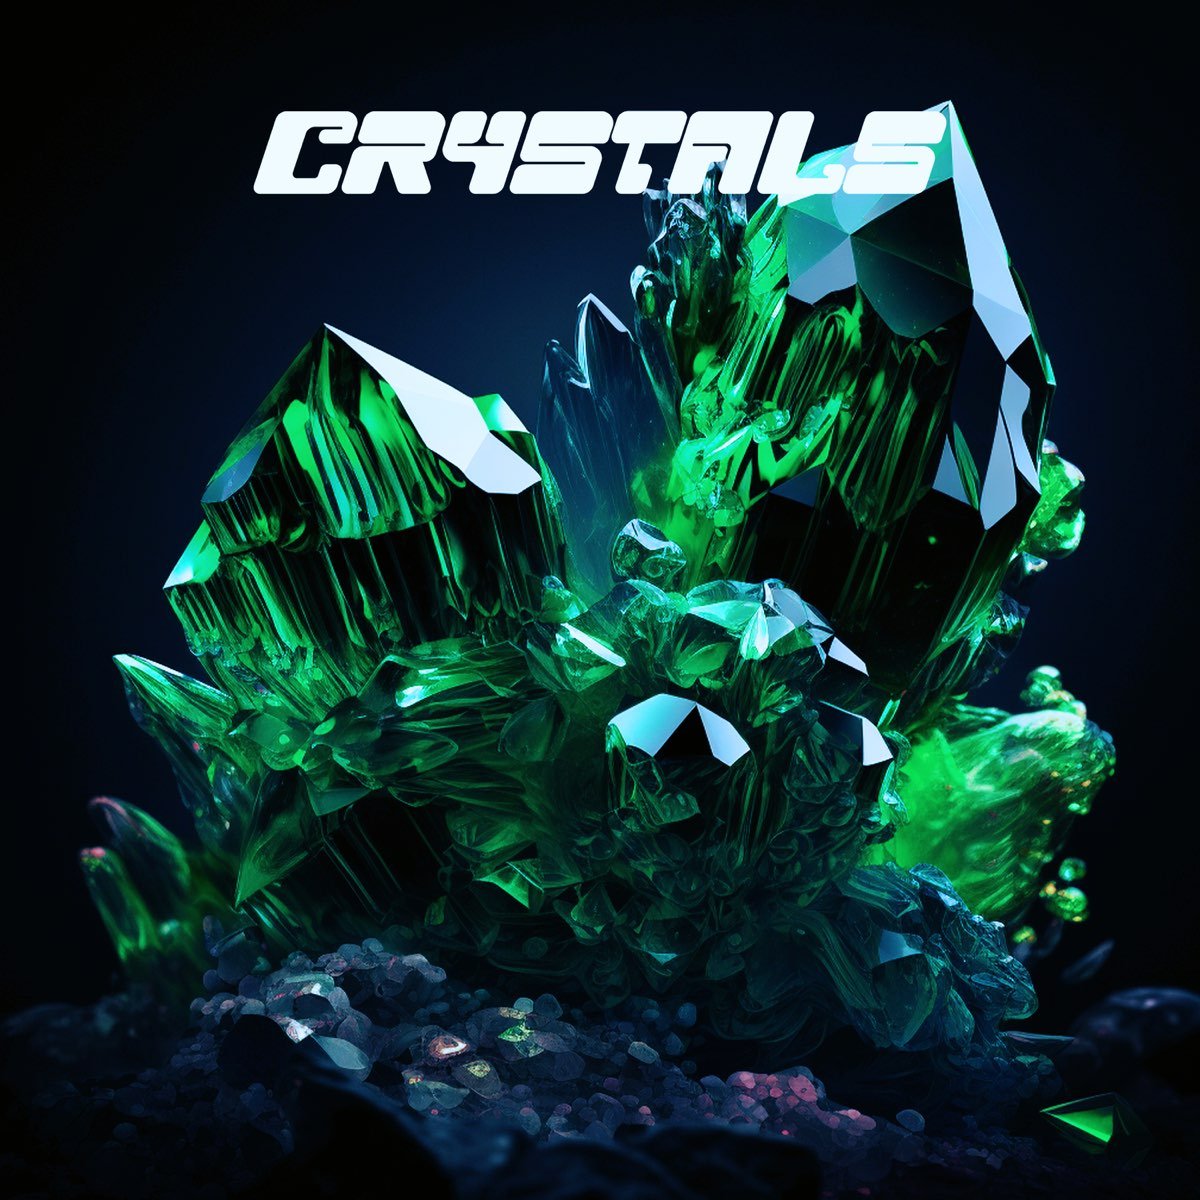 Crystals slowed pr1svx. Crystals (Slowed) от pr1svx. Pr1svx Crystals обложка. Песня Crystals Slowed pr1svx. Isolate.exe - Crystals (Slowed € Reverb).